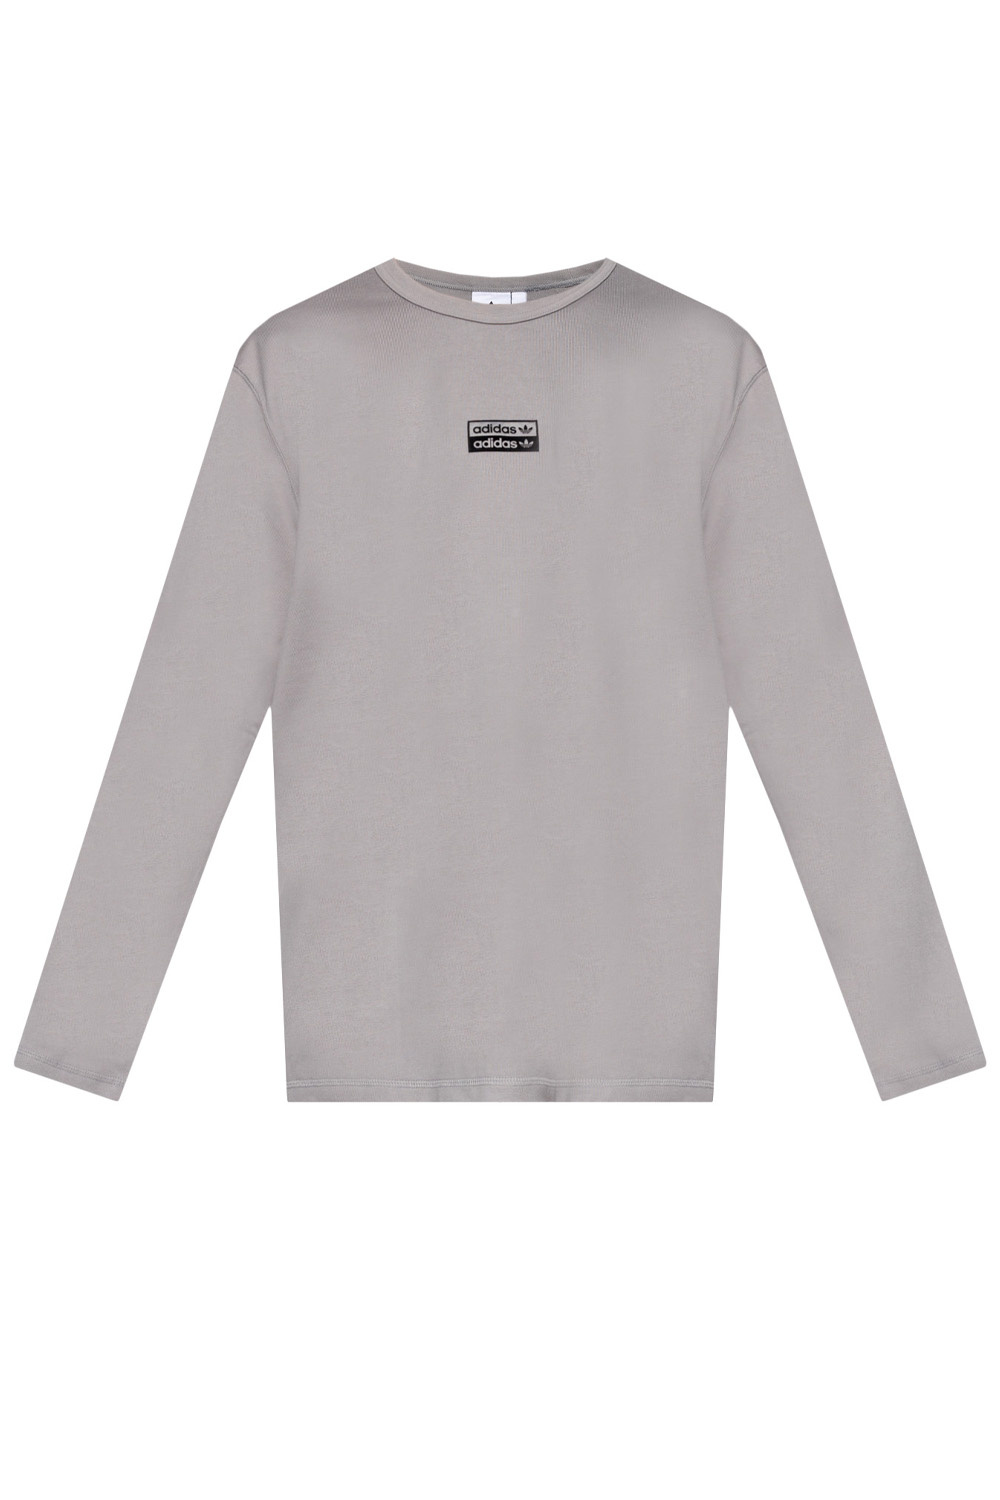 adidas Originals 3569 - Grey T - IetpShops Burundi - shirt with long  sleeves ADIDAS Originals